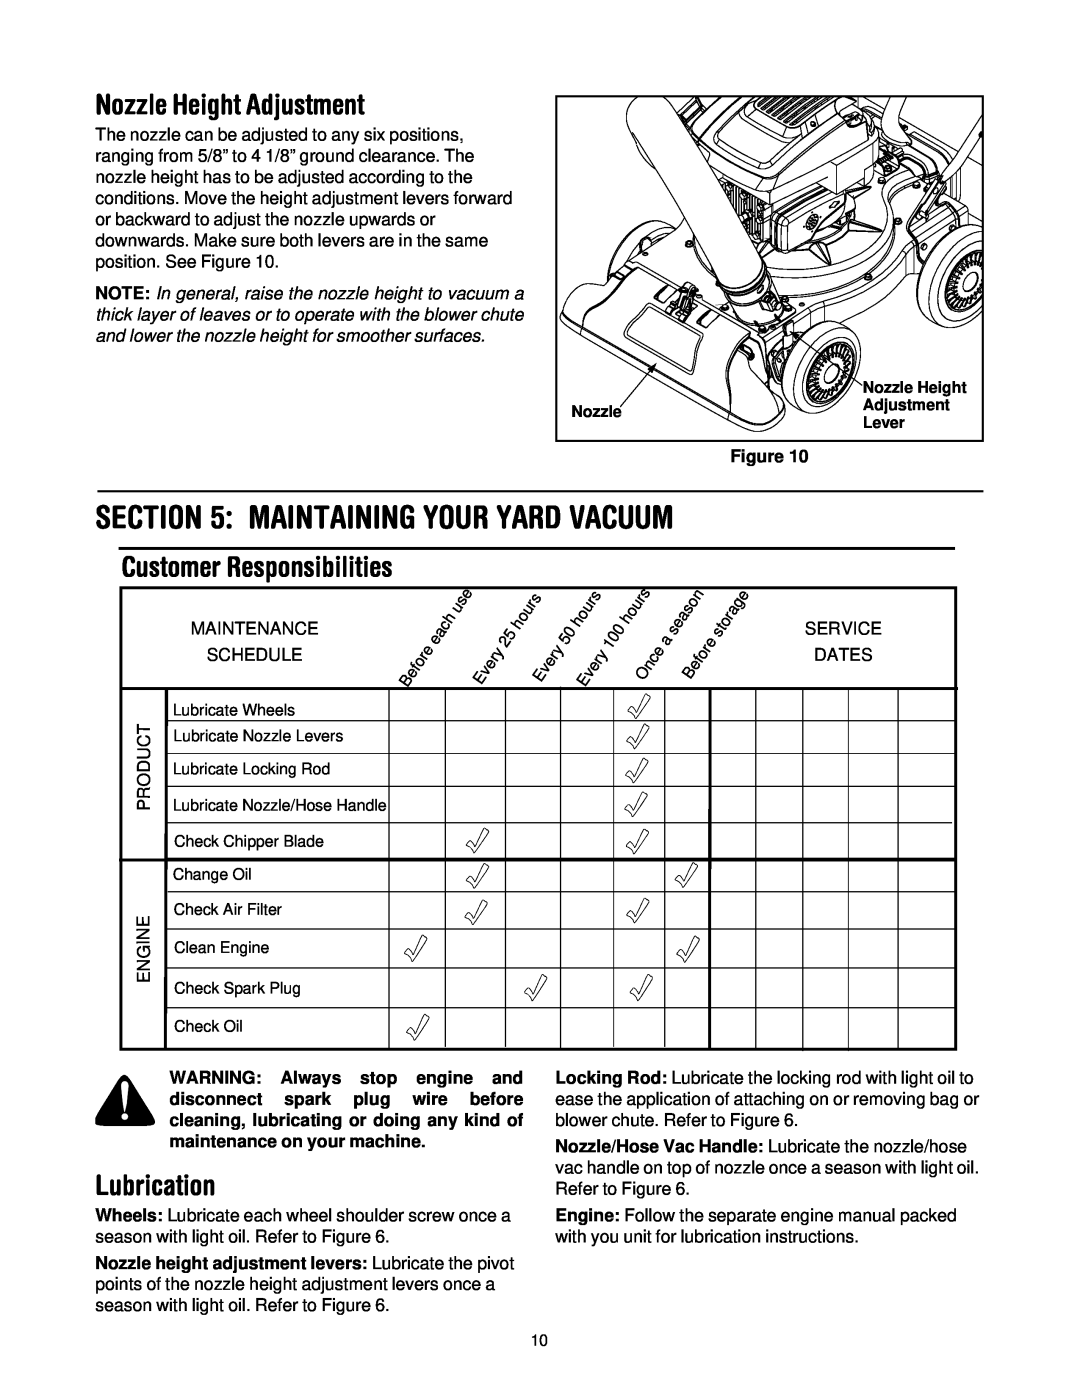 Yard-Man 24A-061I401 manual Nozzle Height Adjustment, Customer Responsibilities, Lubrication, Maintaining Your Yard Vacuum 